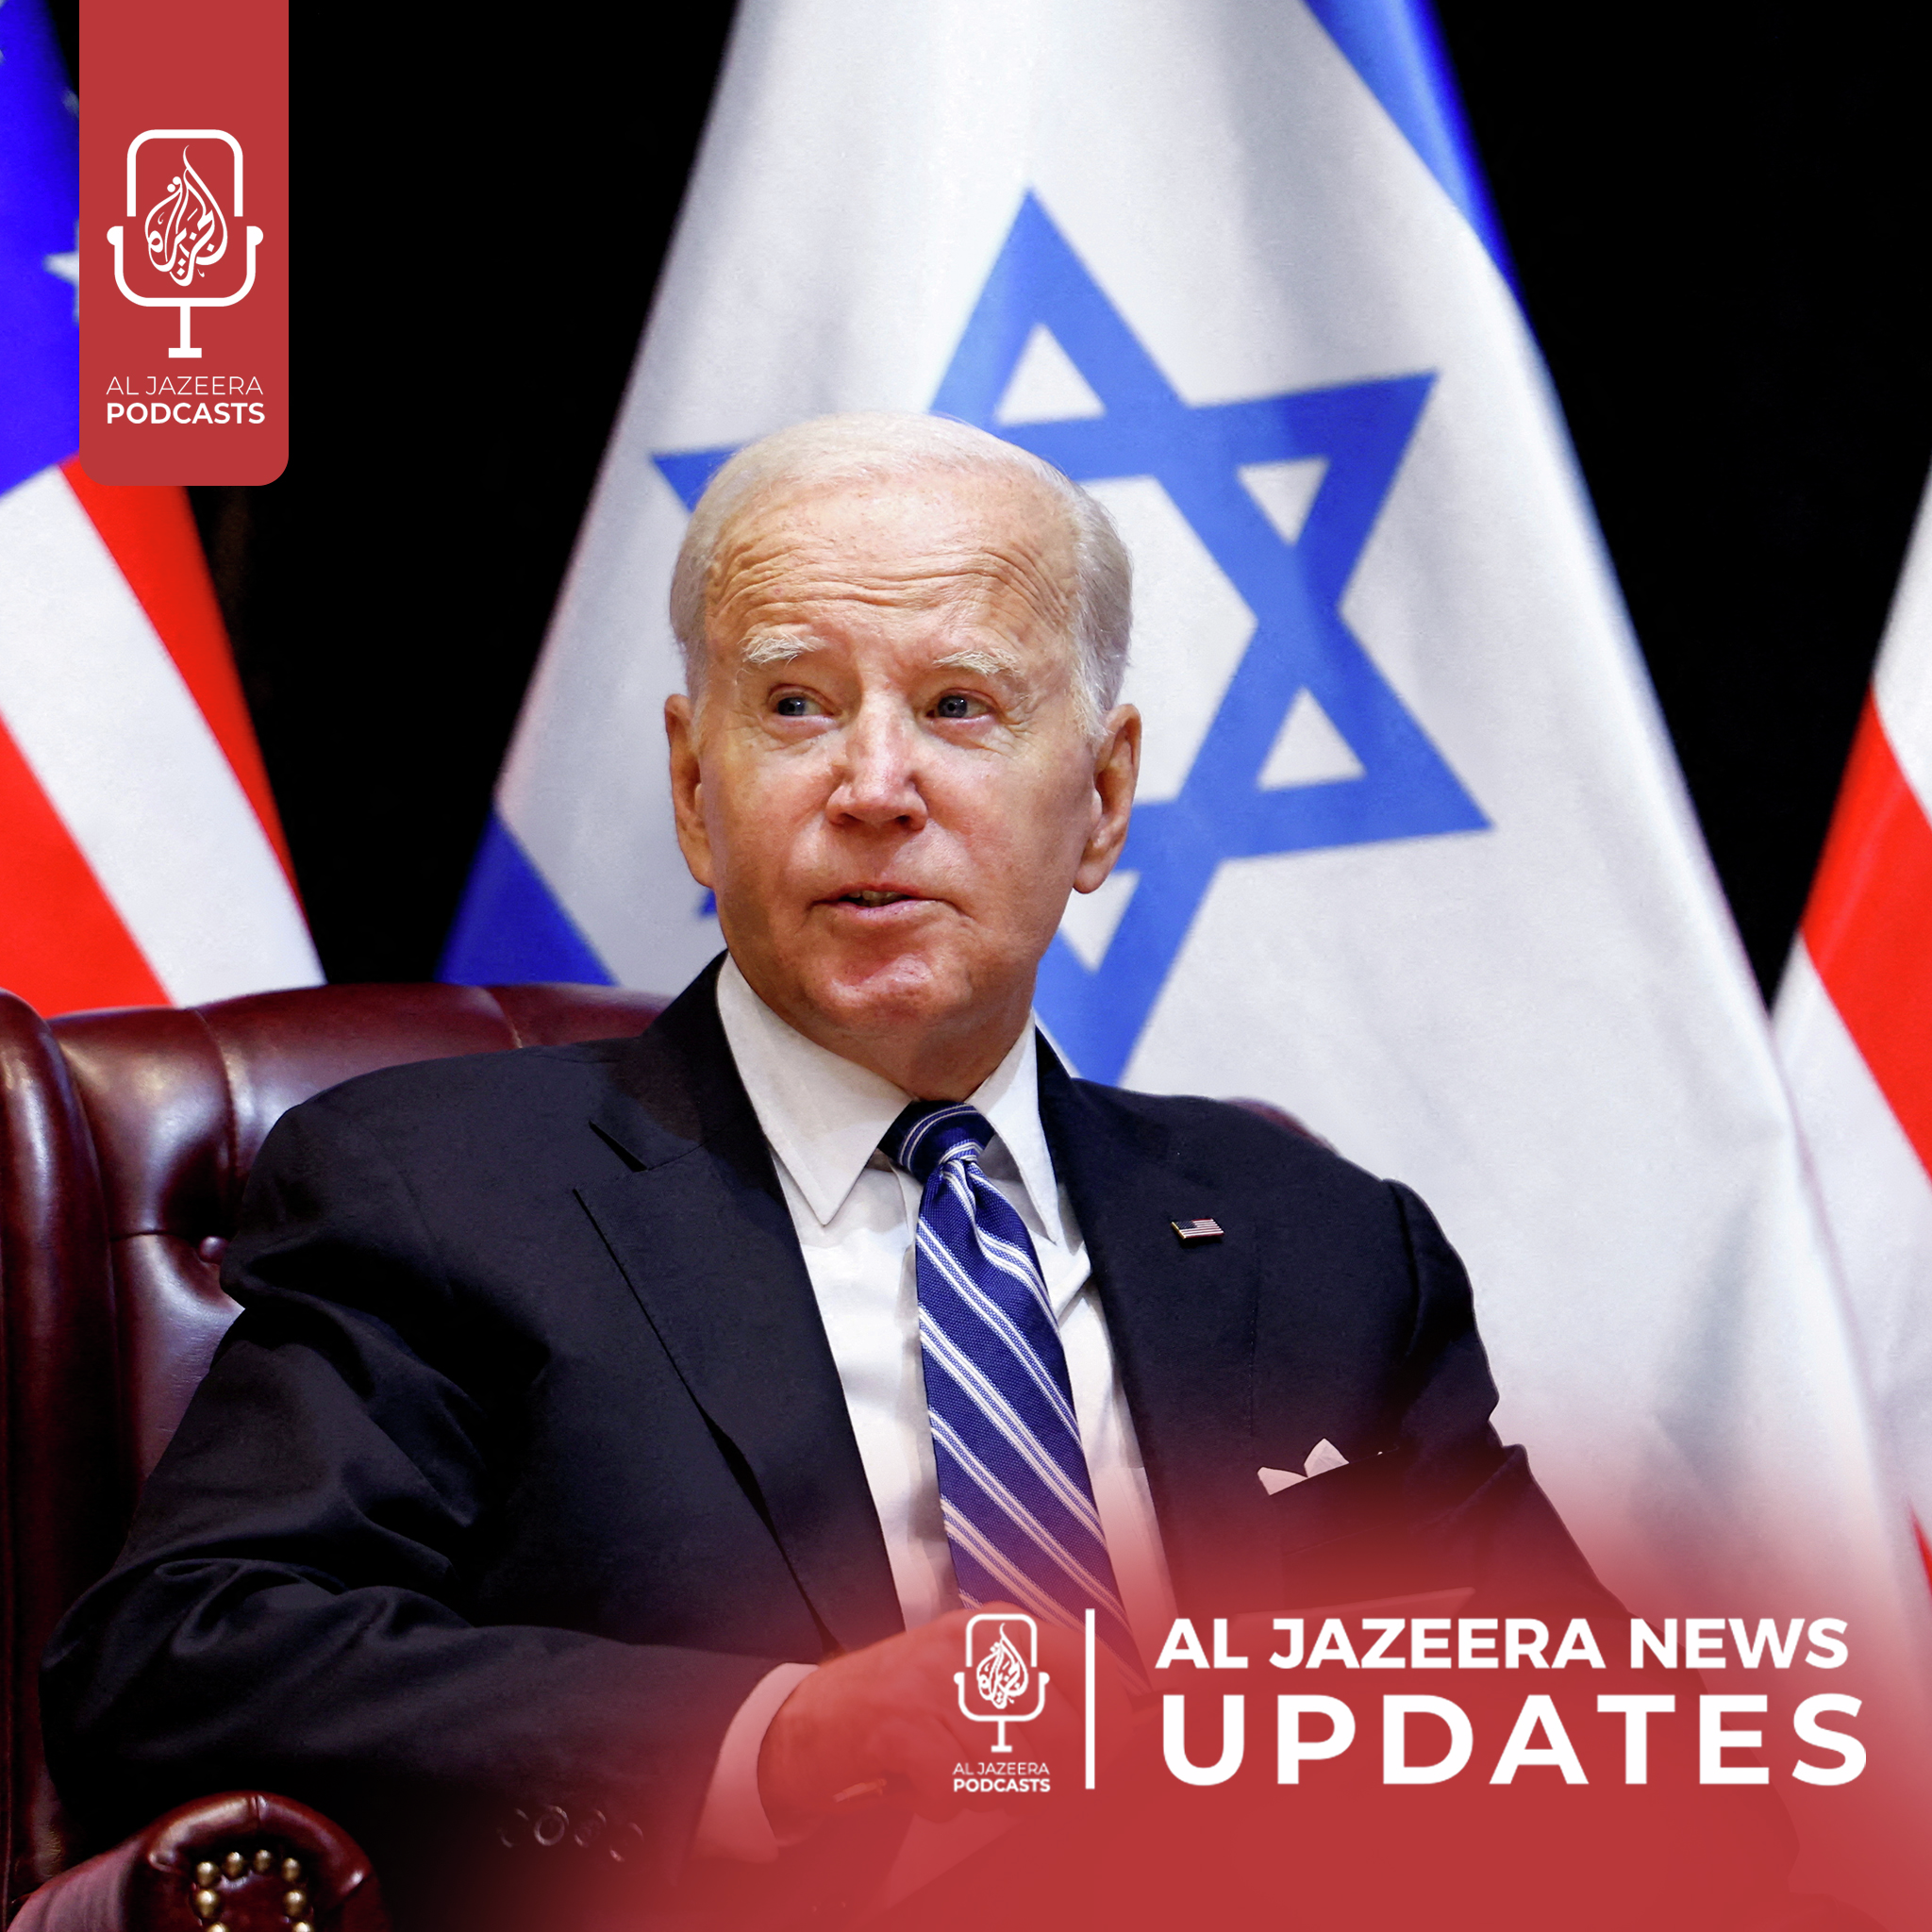 Death toll in Gaza rises, Netanyahu visits the US